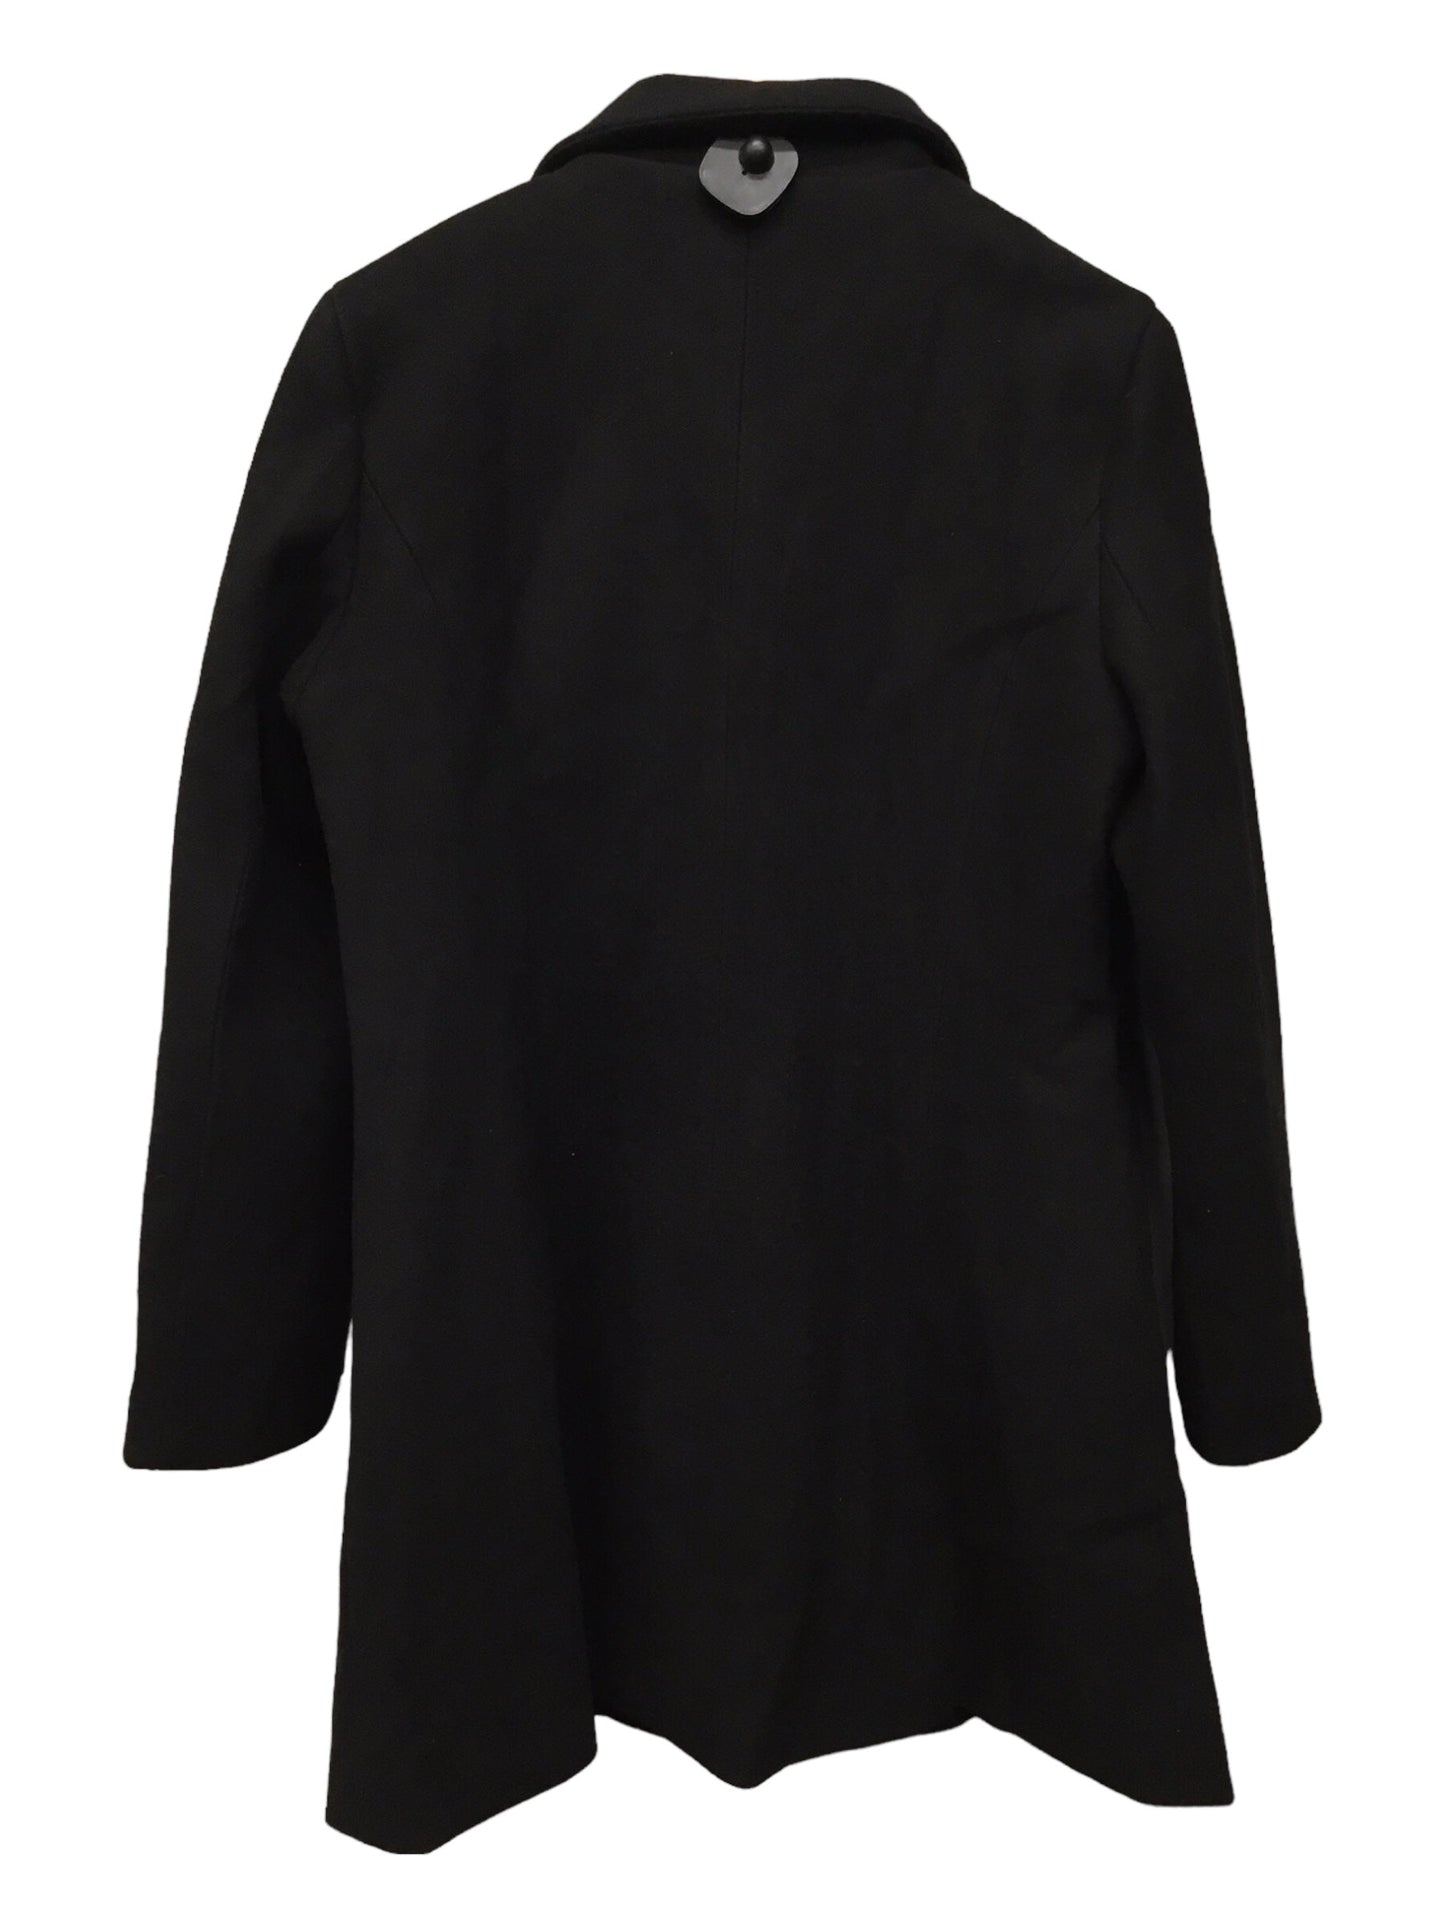 NWT Black Coat Peacoat Allegra K, Size L